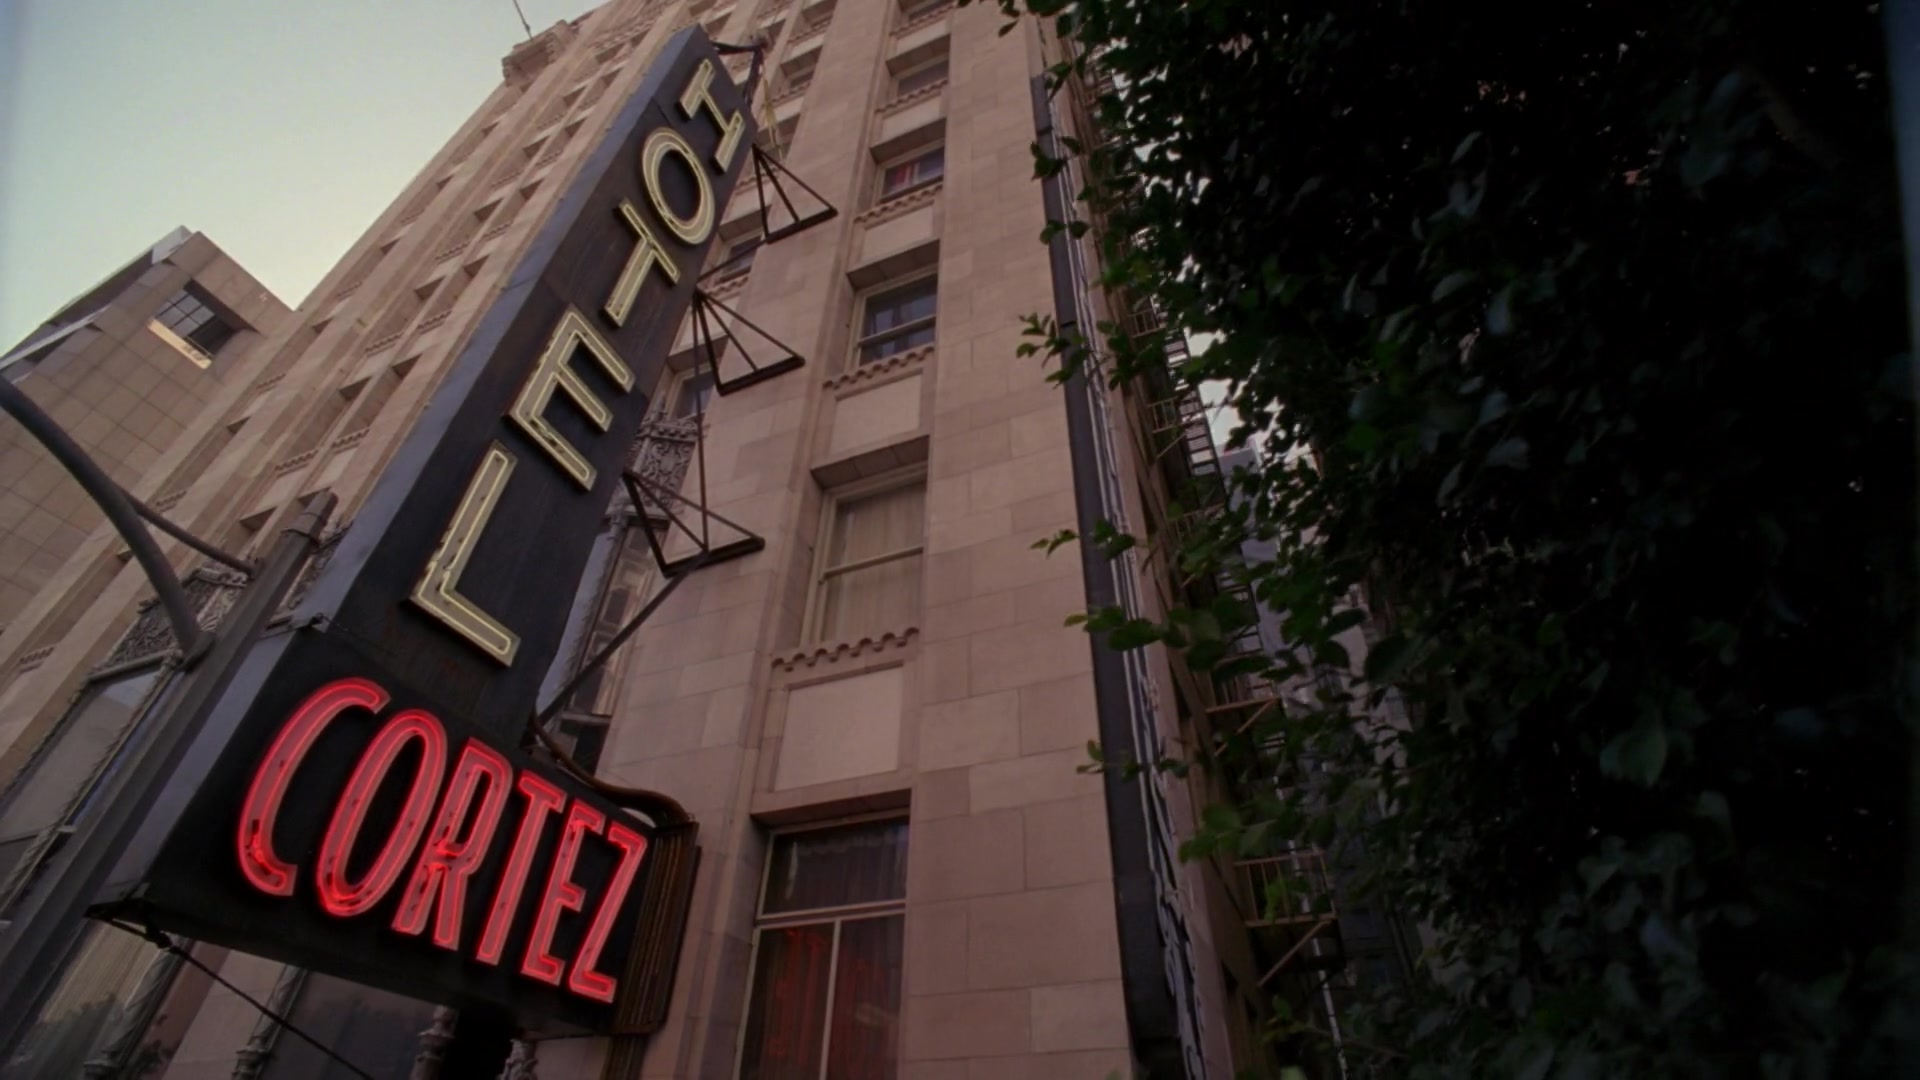 Hotel Cortez American Horror Story